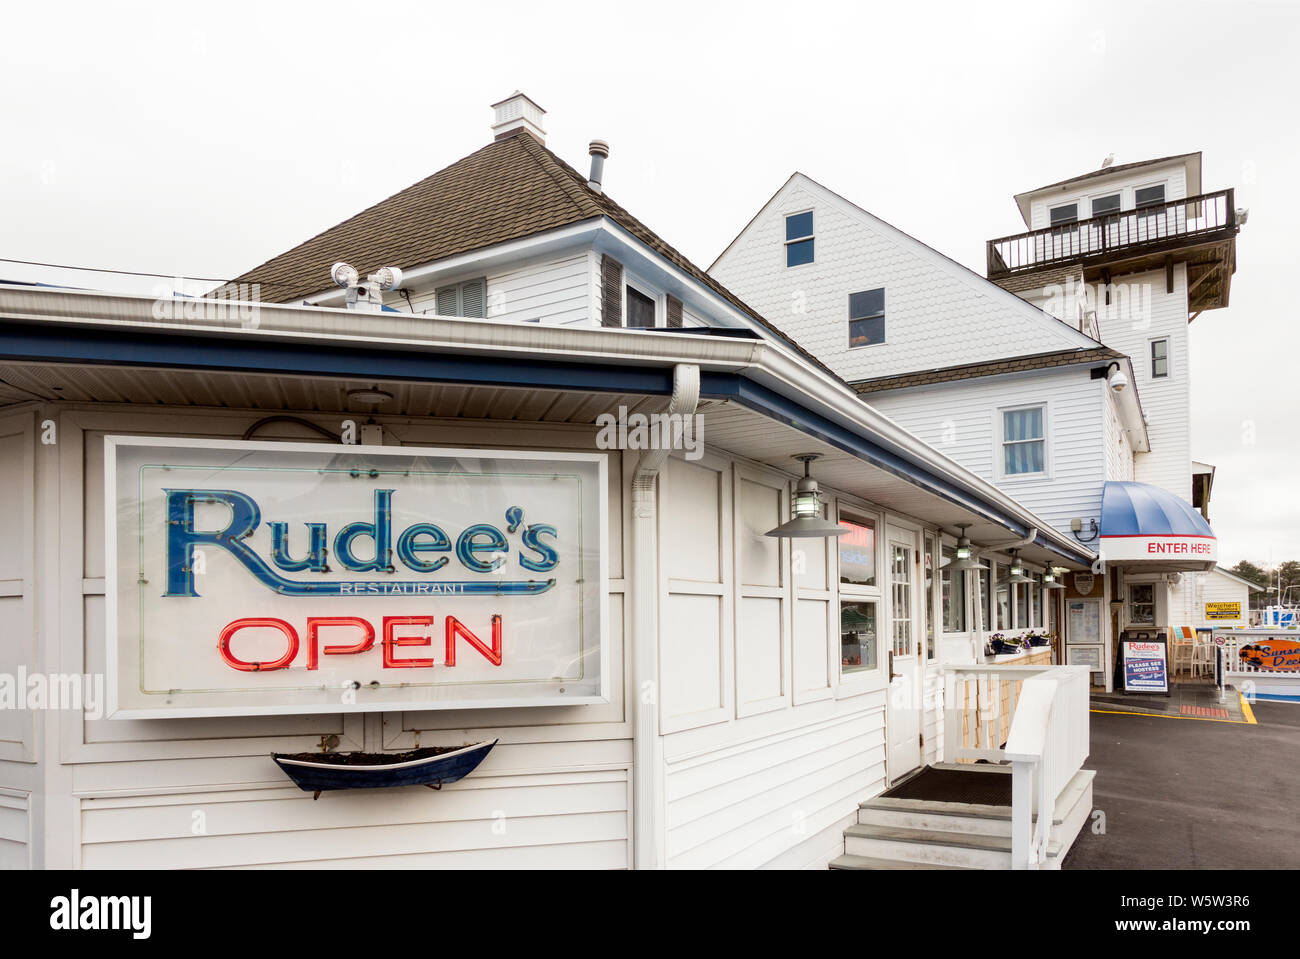 Rudee's restaurant and cabana bar Virginia Beach Stock Photo